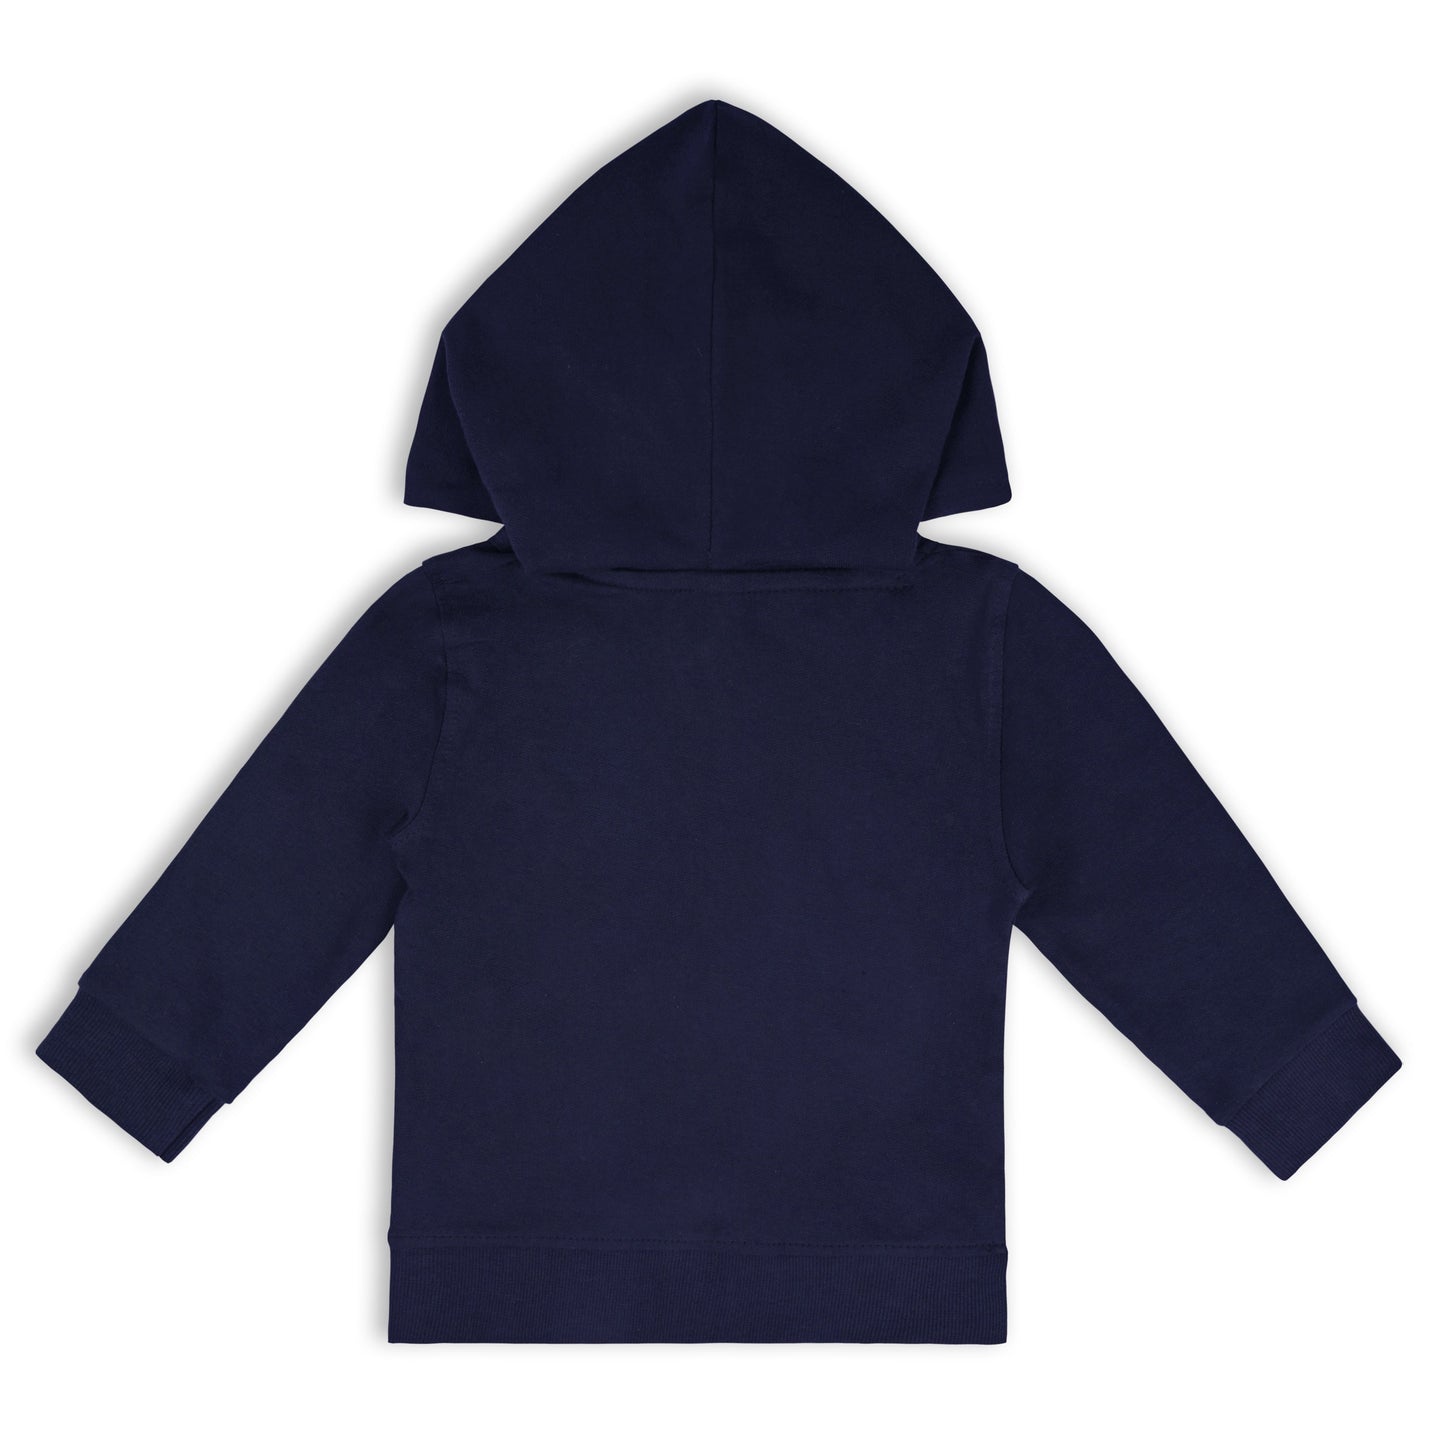 Wishkaro Unisex Cotton Applique Full Sleeve Hooded Sweatshirt-T301sb